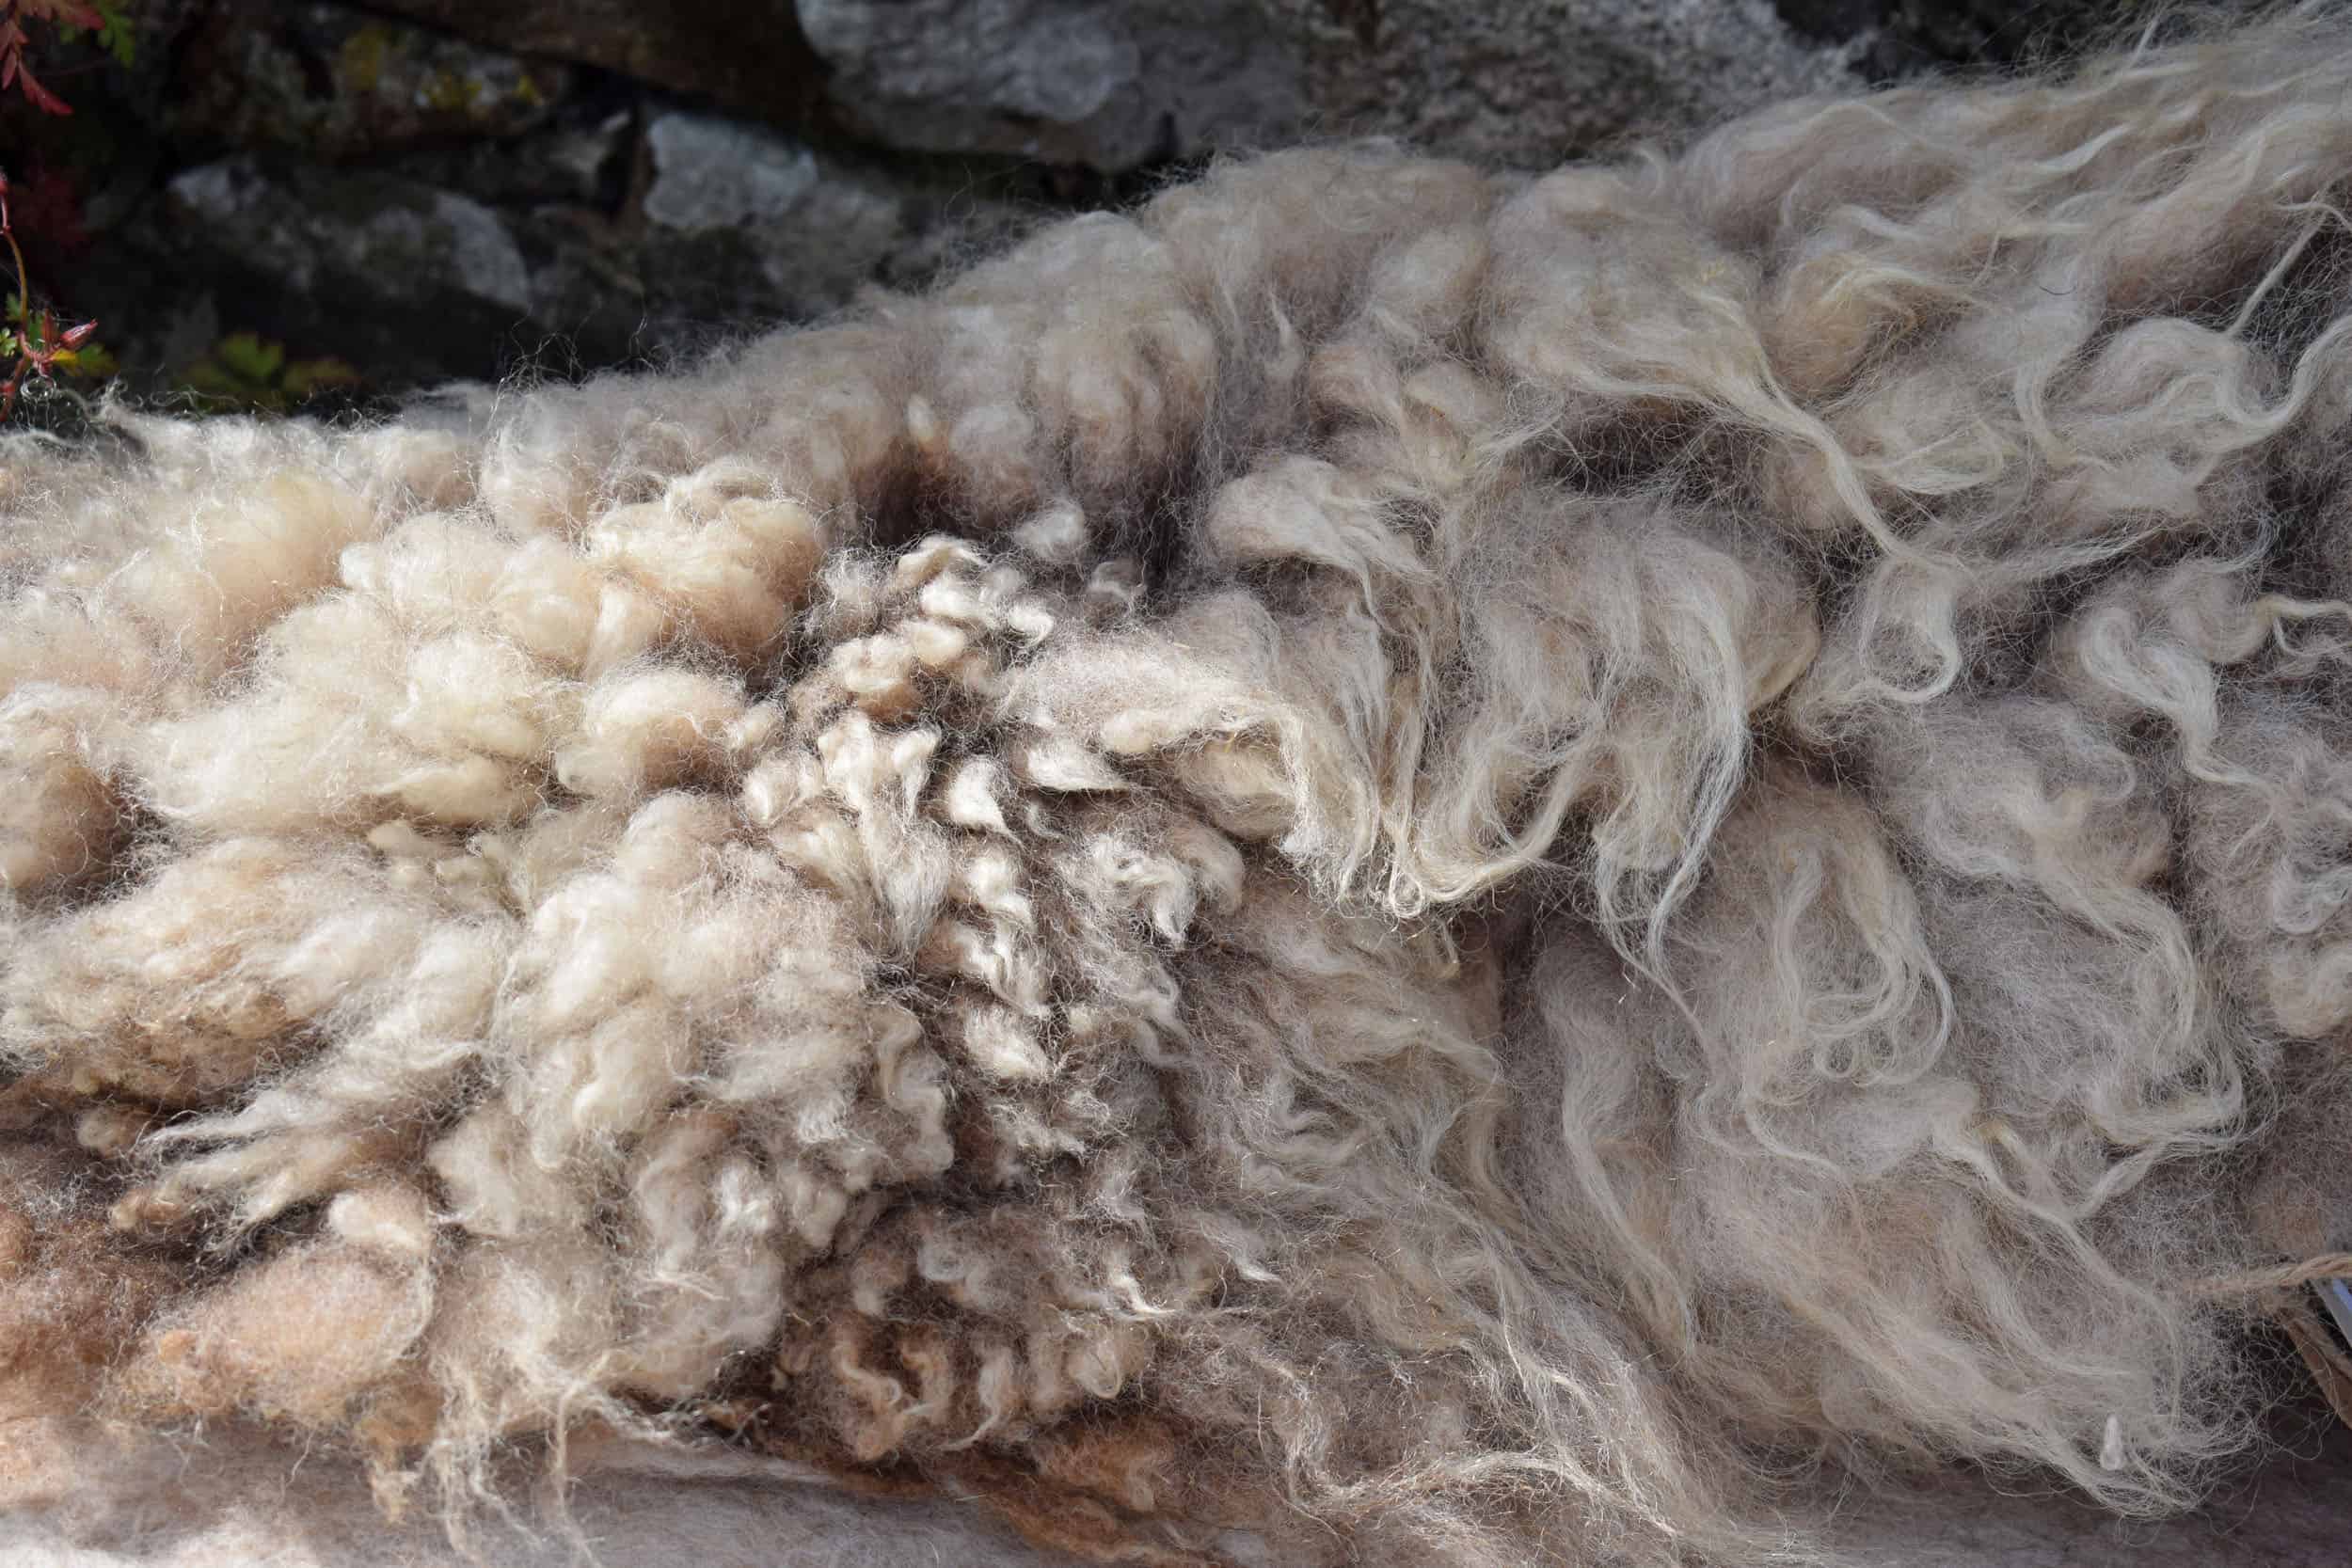 Felted fleece vegetarian sheepskin wool seat pad brown harriet ethical kind fiber